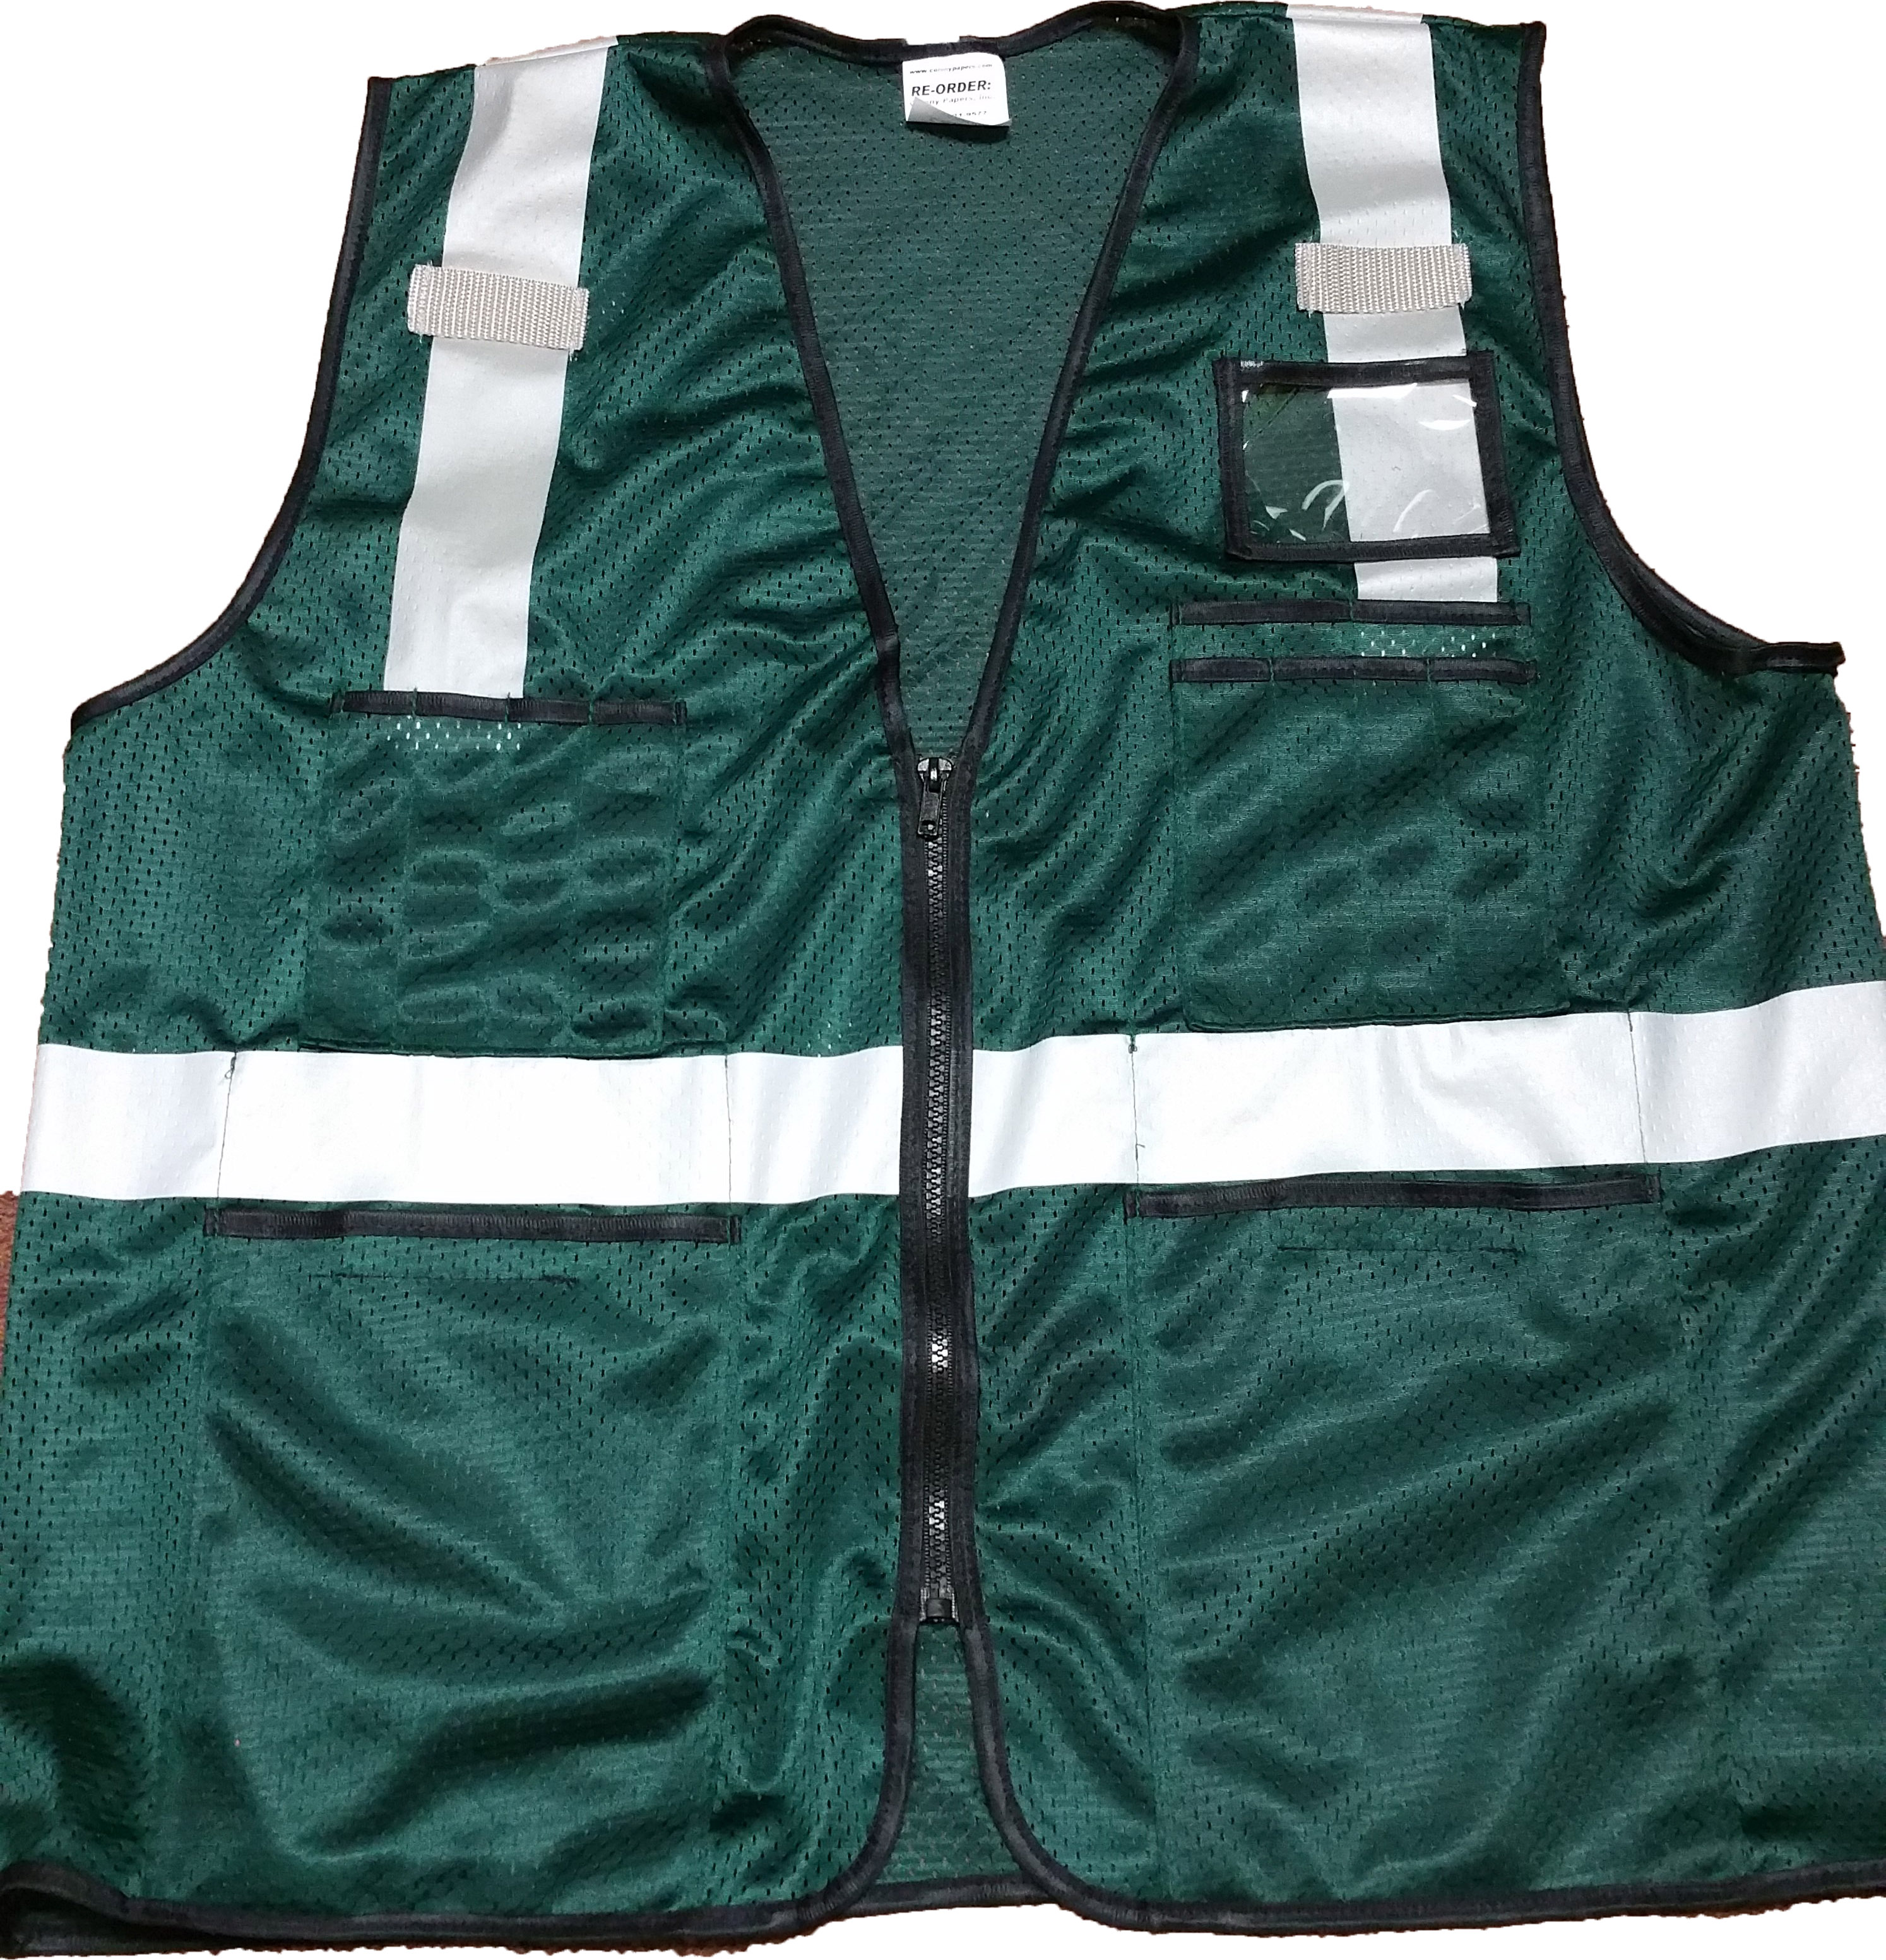 Safety Vests - 350-0102888 - Forest (Dark) Green Mesh Safety Vest with Silver H